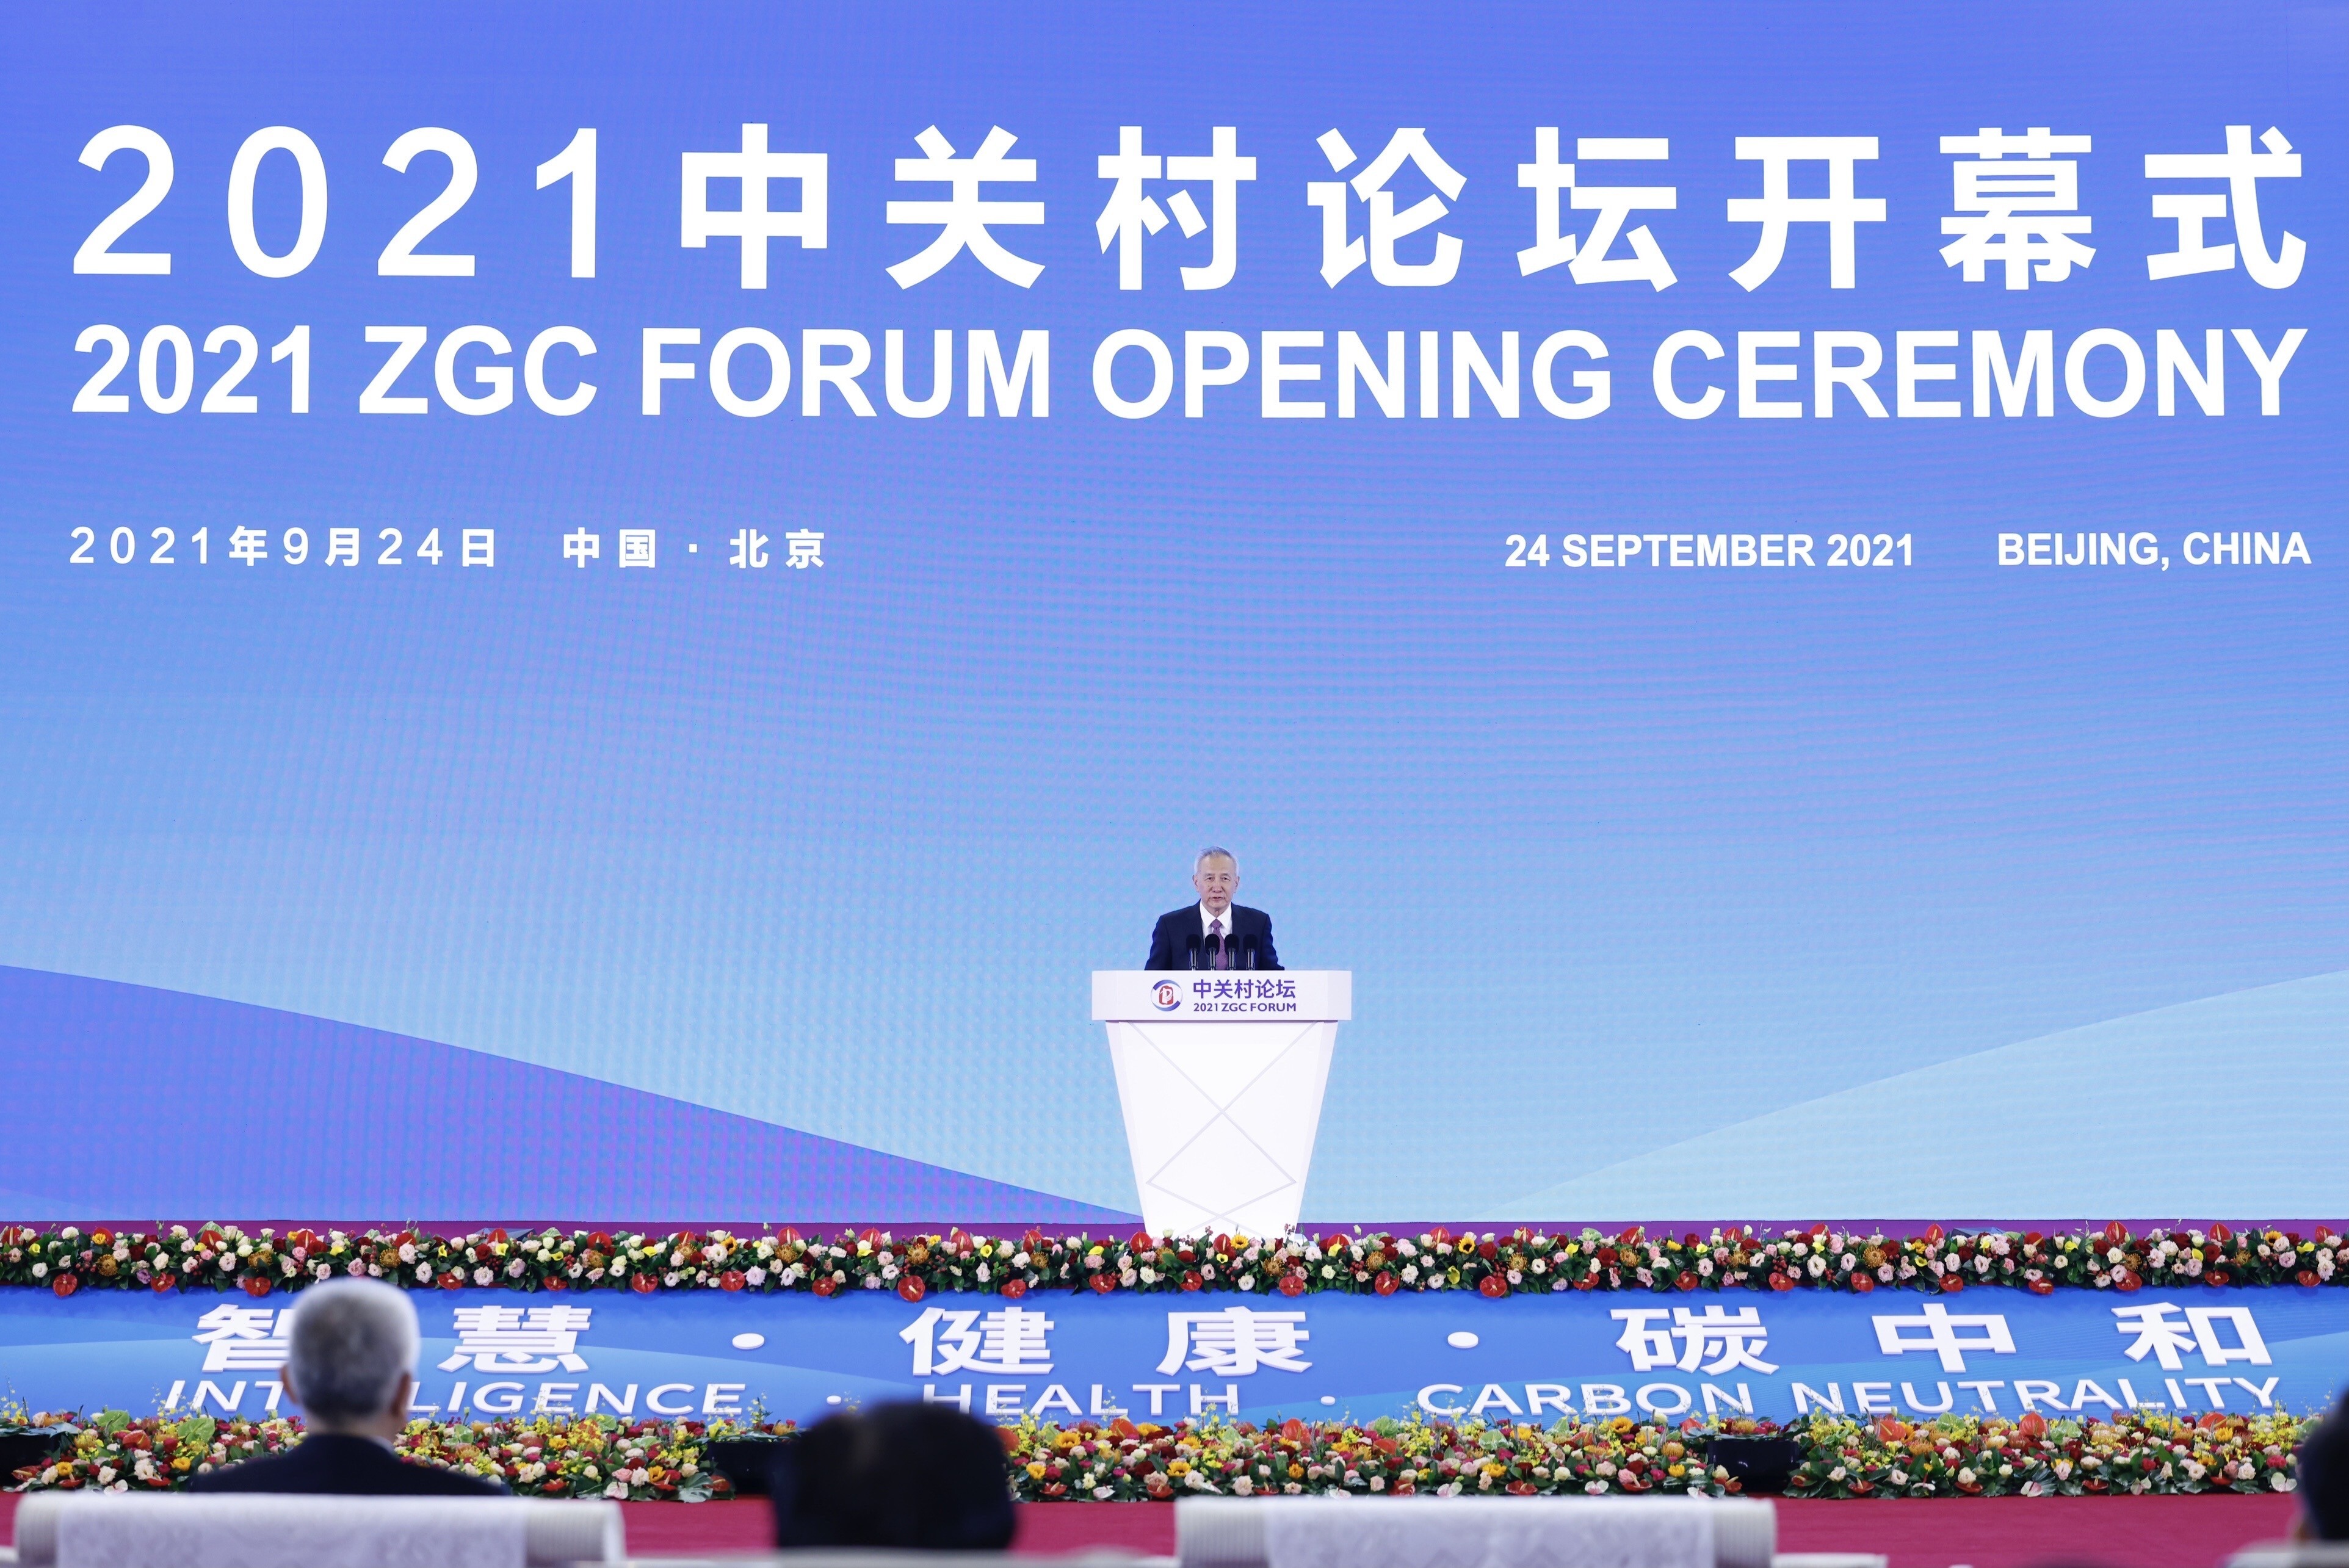 Chinese Vice Premier Liu He at the opening ceremony of the 2021 Zhongguancun Forum in Beijing. Photo: Xinhua